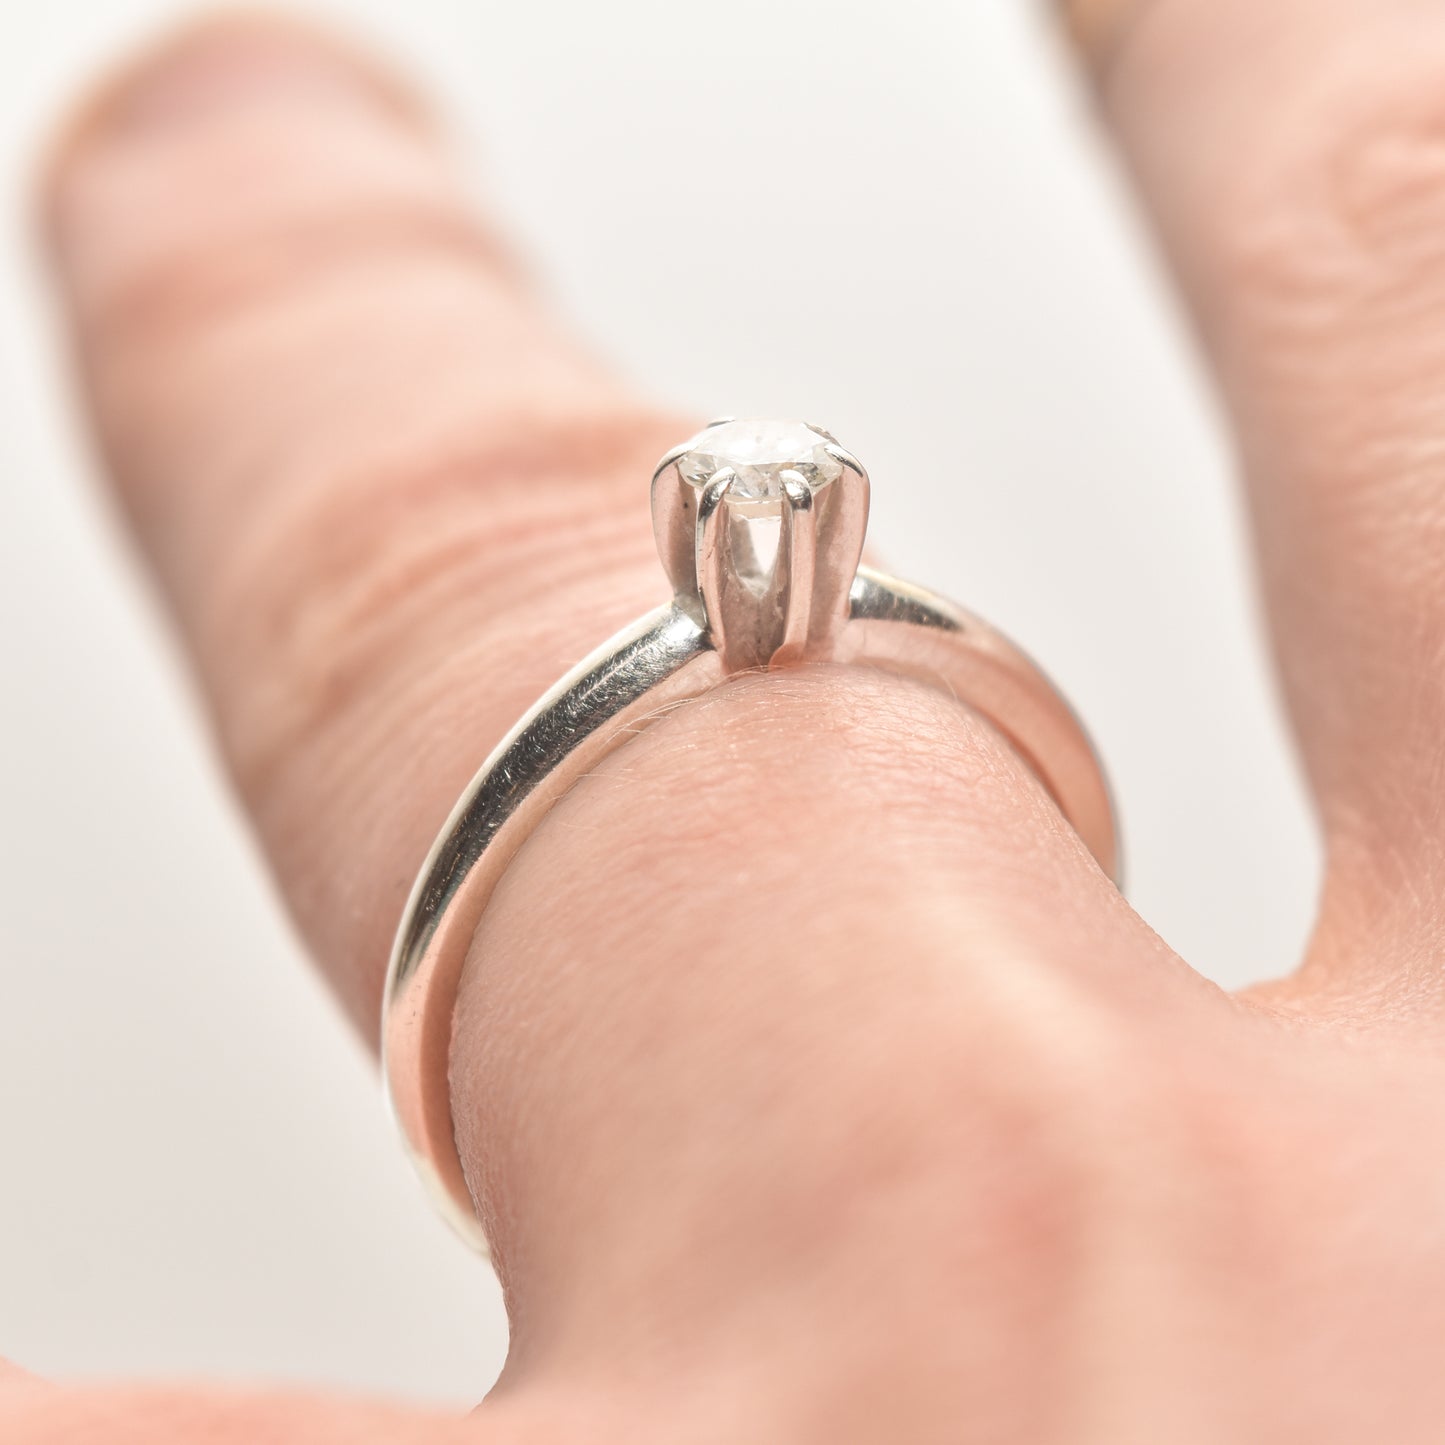 Elegant 14K white gold diamond solitaire engagement ring, 0.25 carat brilliant cut on a size 6.25 finger